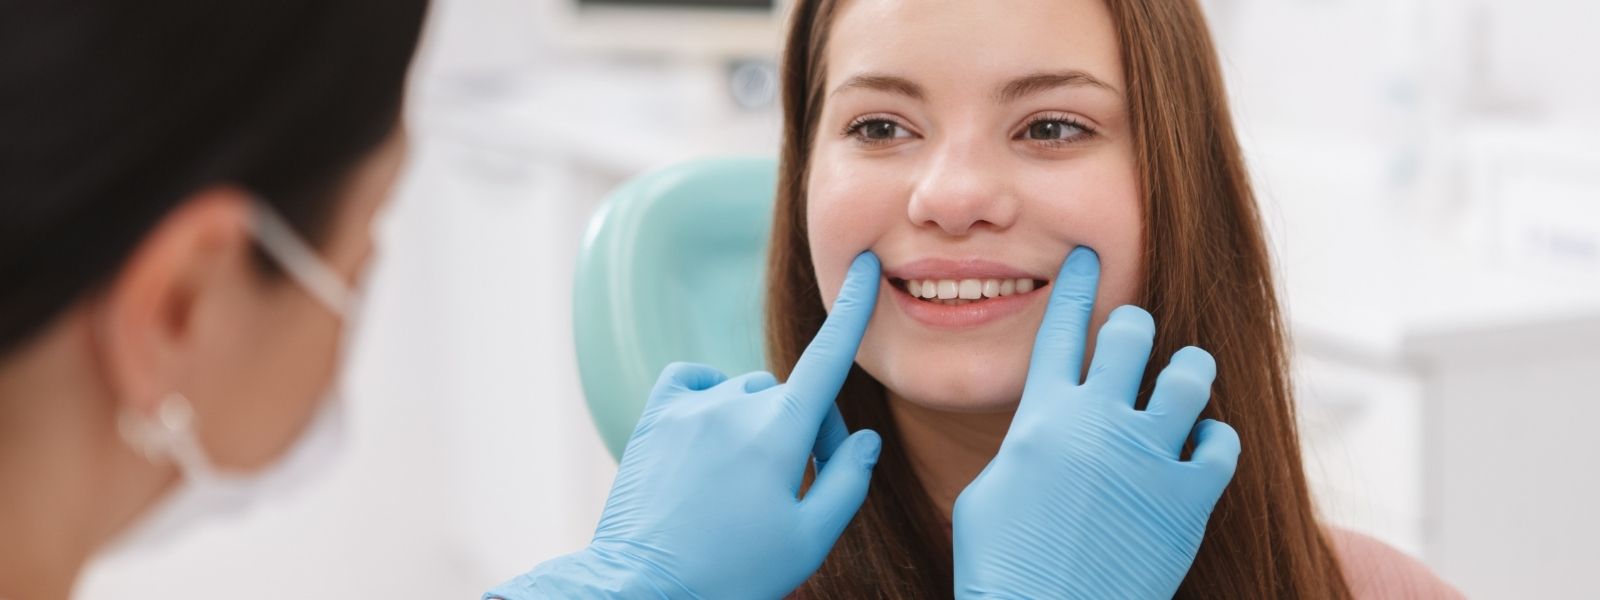 girl creating smile at dentist